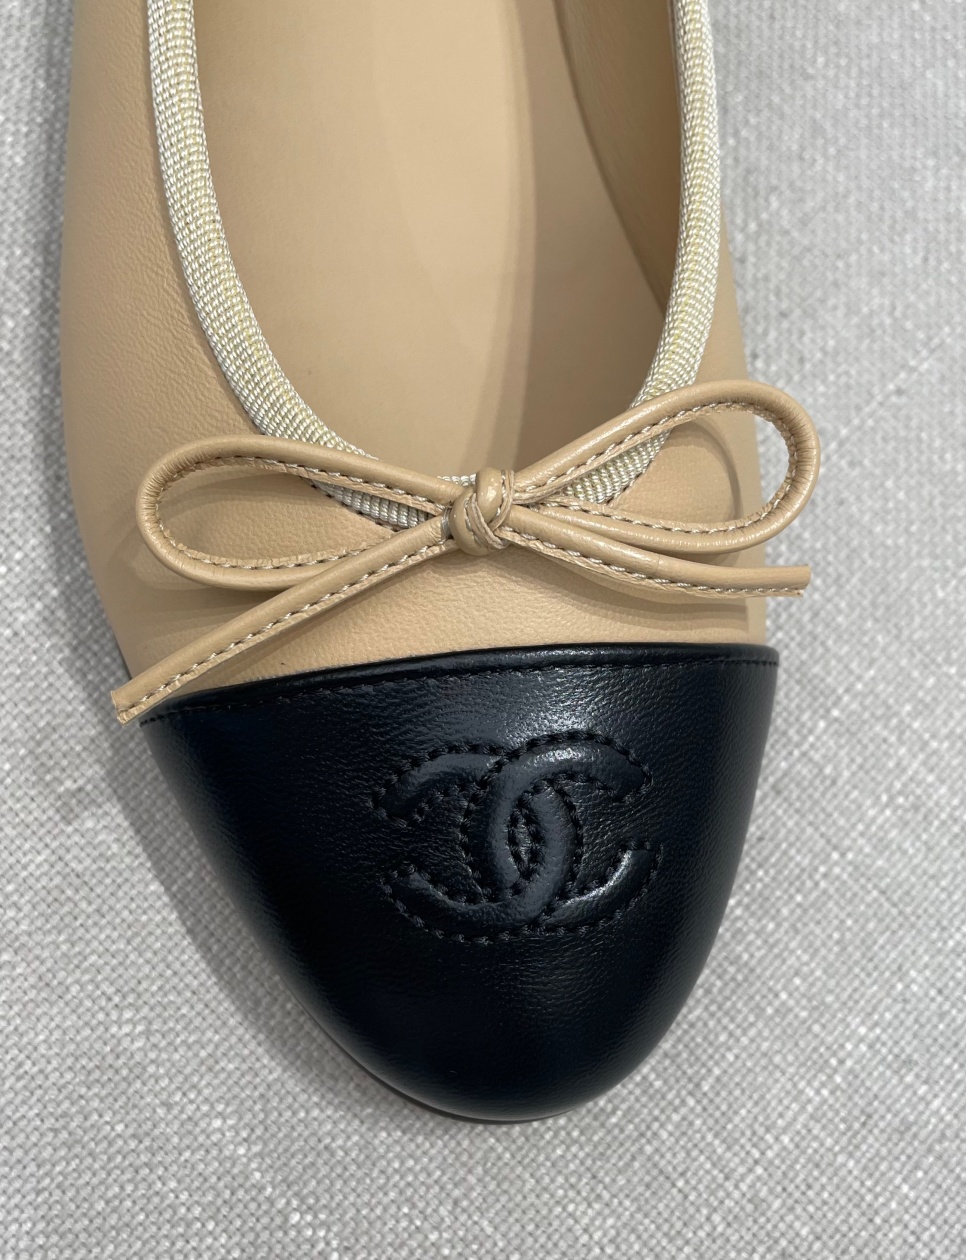 Tampilan toe cap, bow, dan juga collar depan Chanel Ballet Flats autentik.